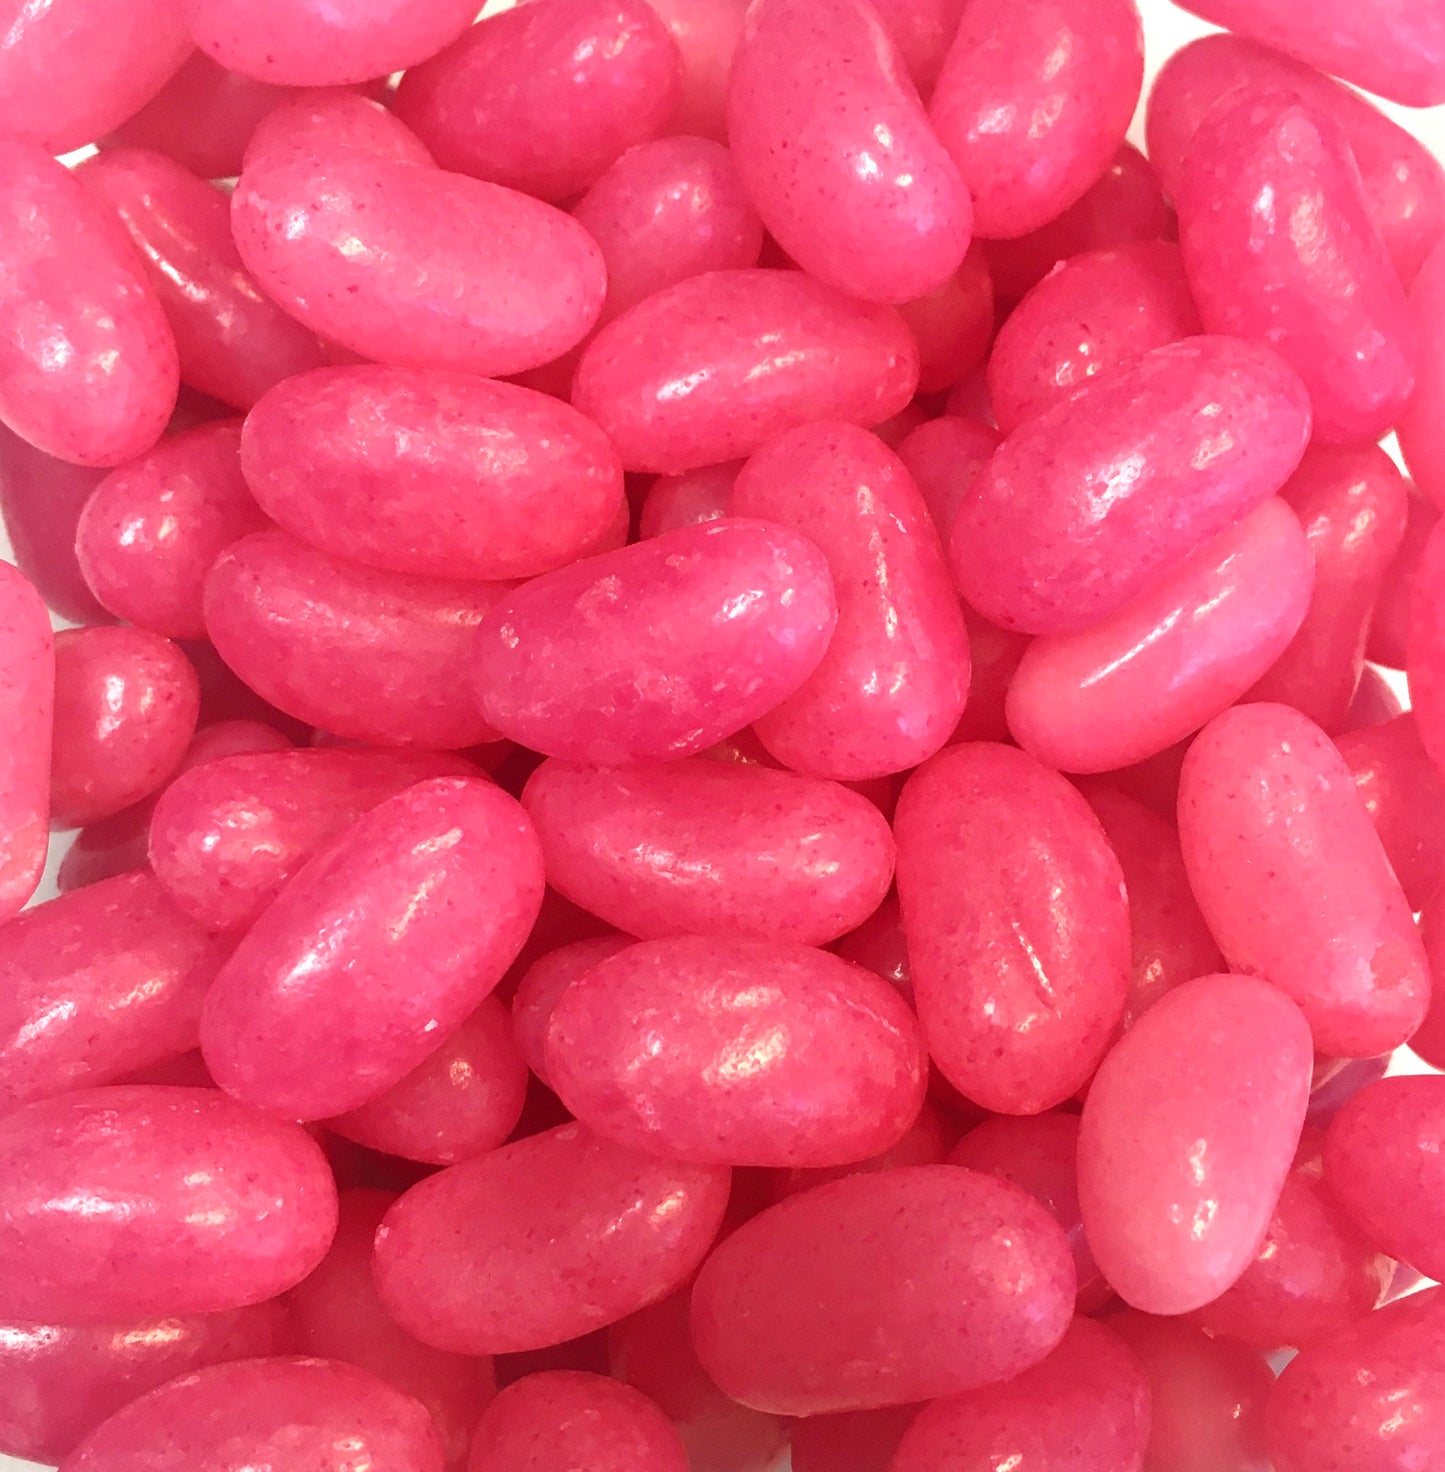 Allseps Pink Jelly Beans